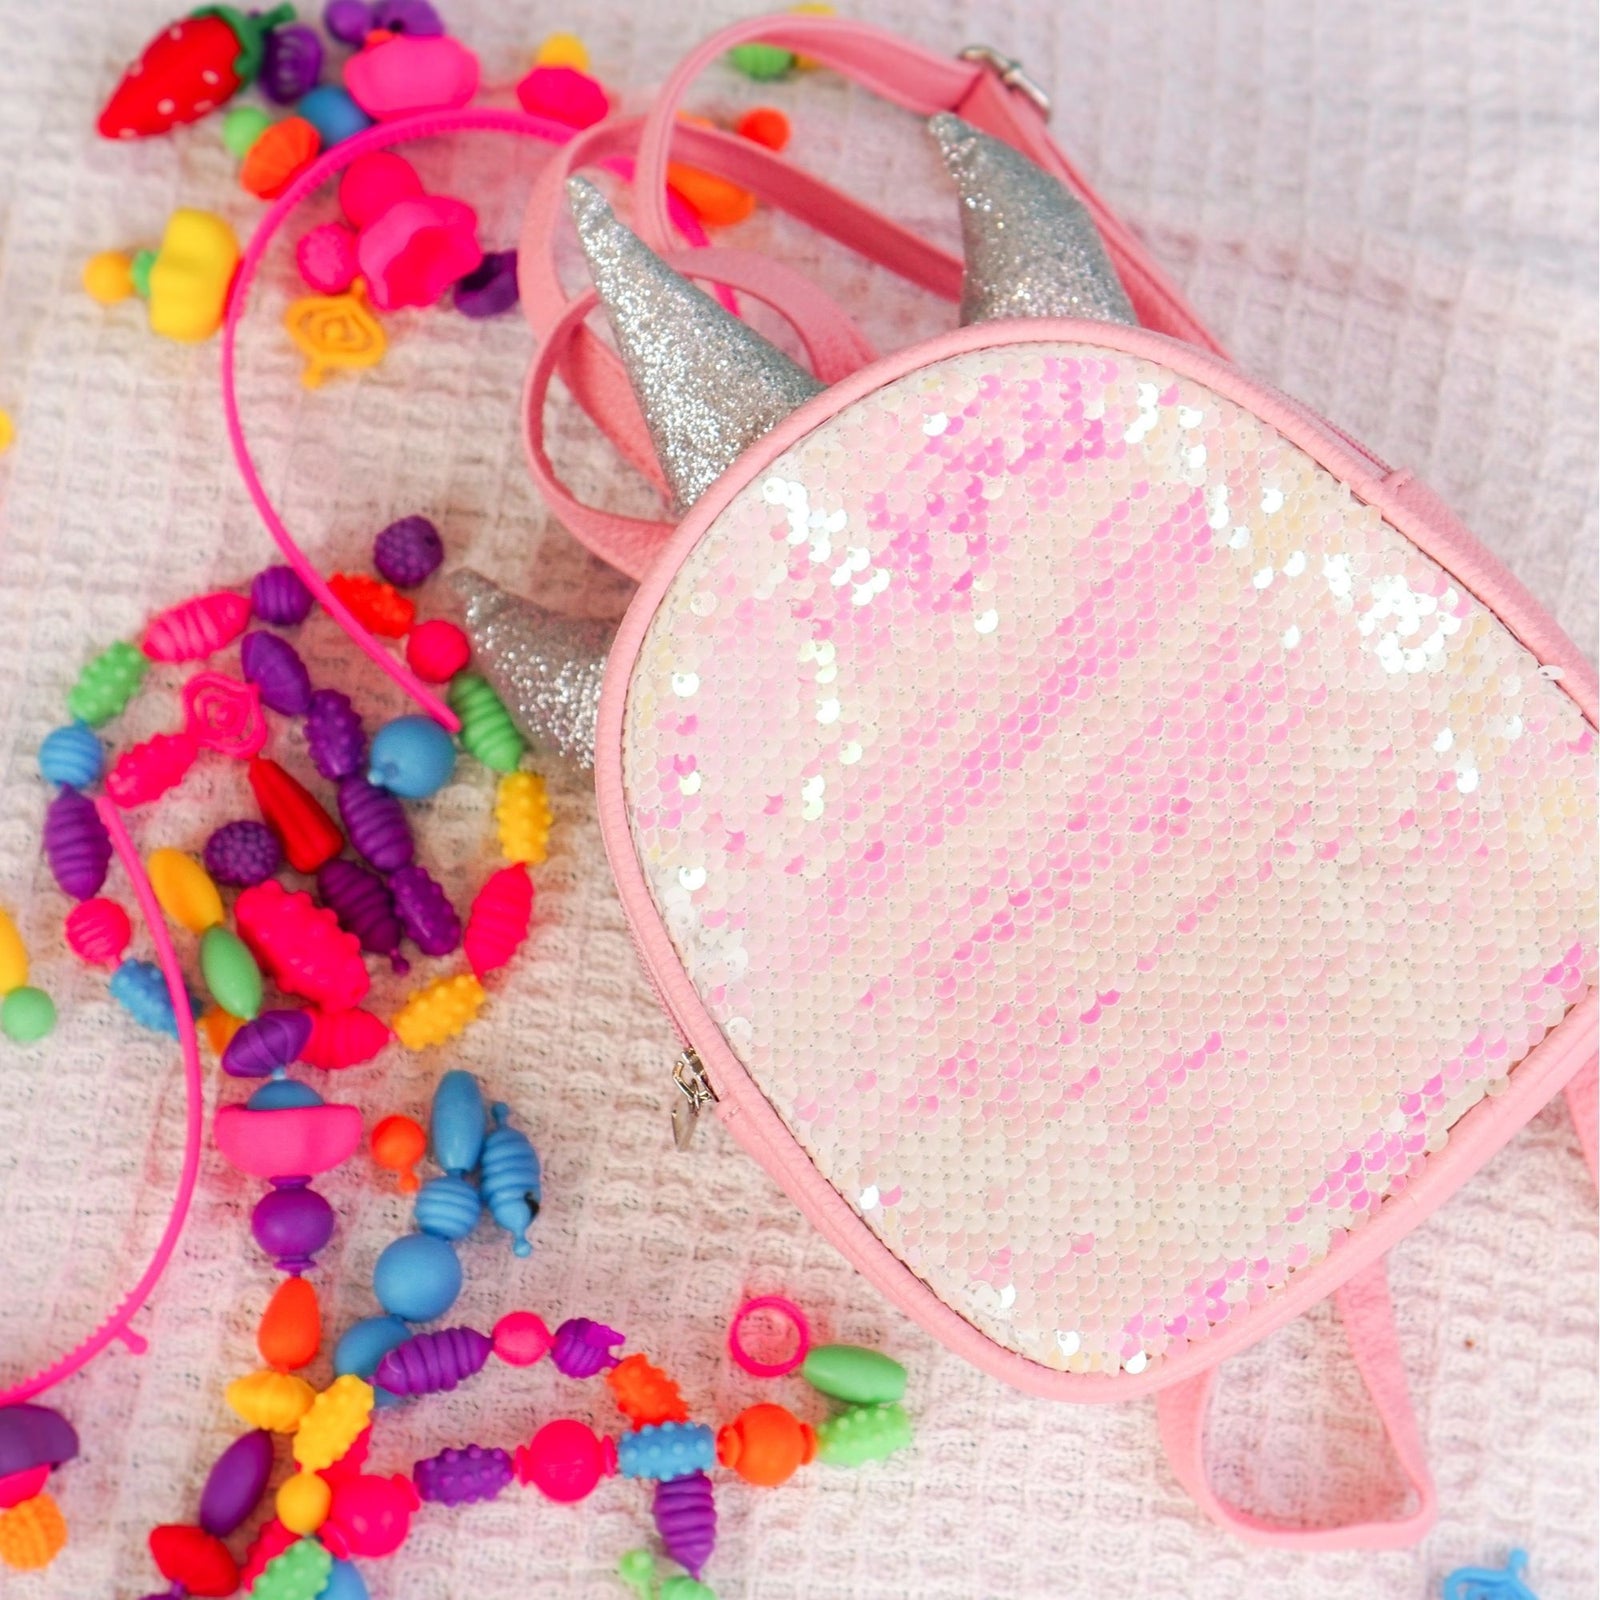 Linkhome Snap Beads Set 300 PCS Kids' Jewelry Making Kits for